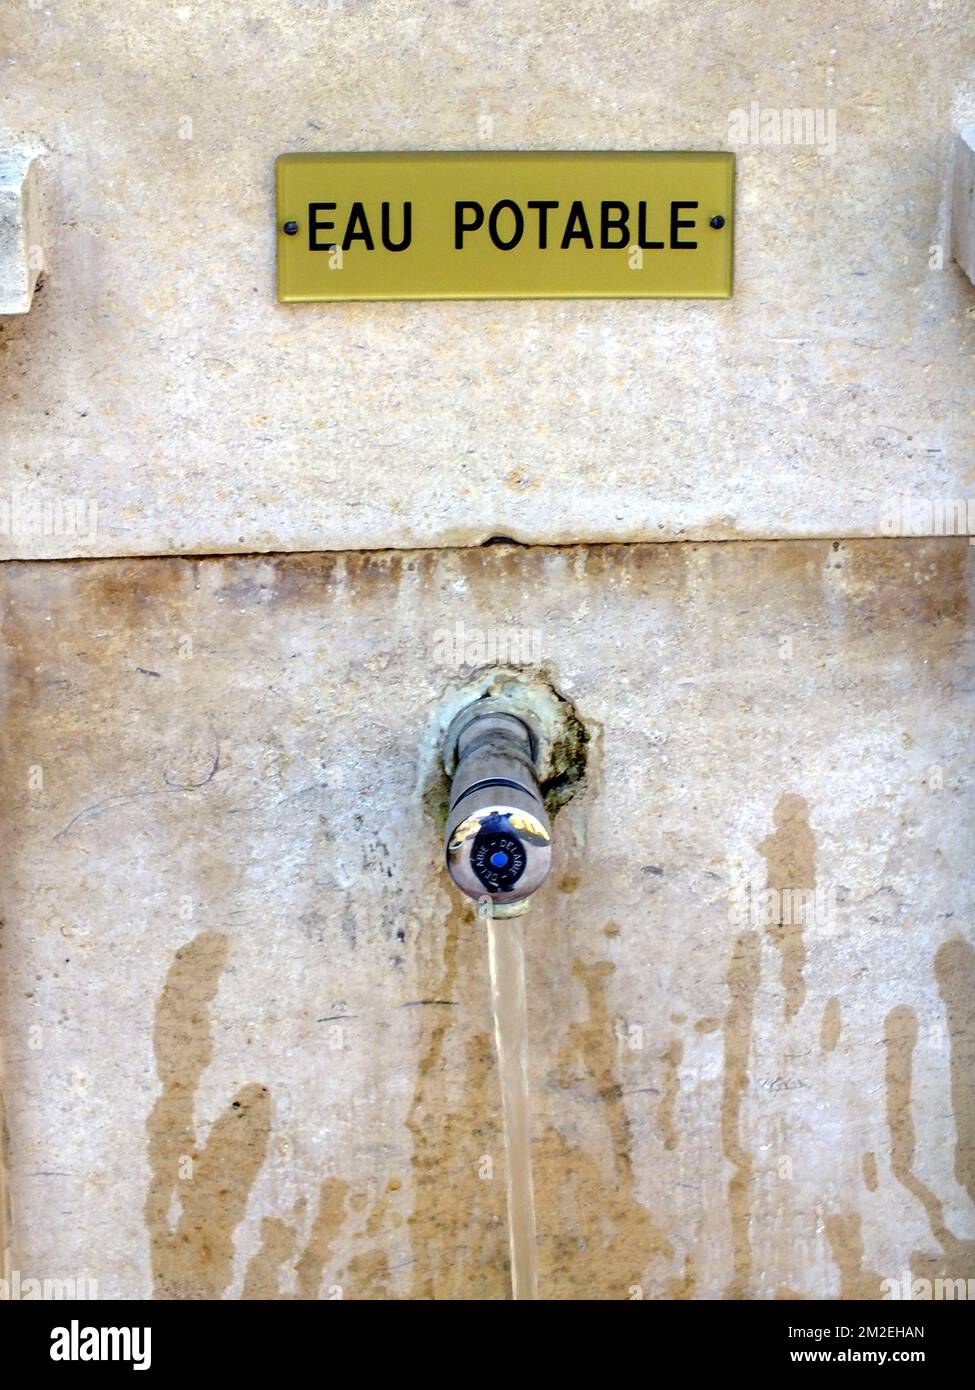 Fontana d'acqua in Rue | Fontaine dans la rue eau potabile 18/04/2018 Foto Stock